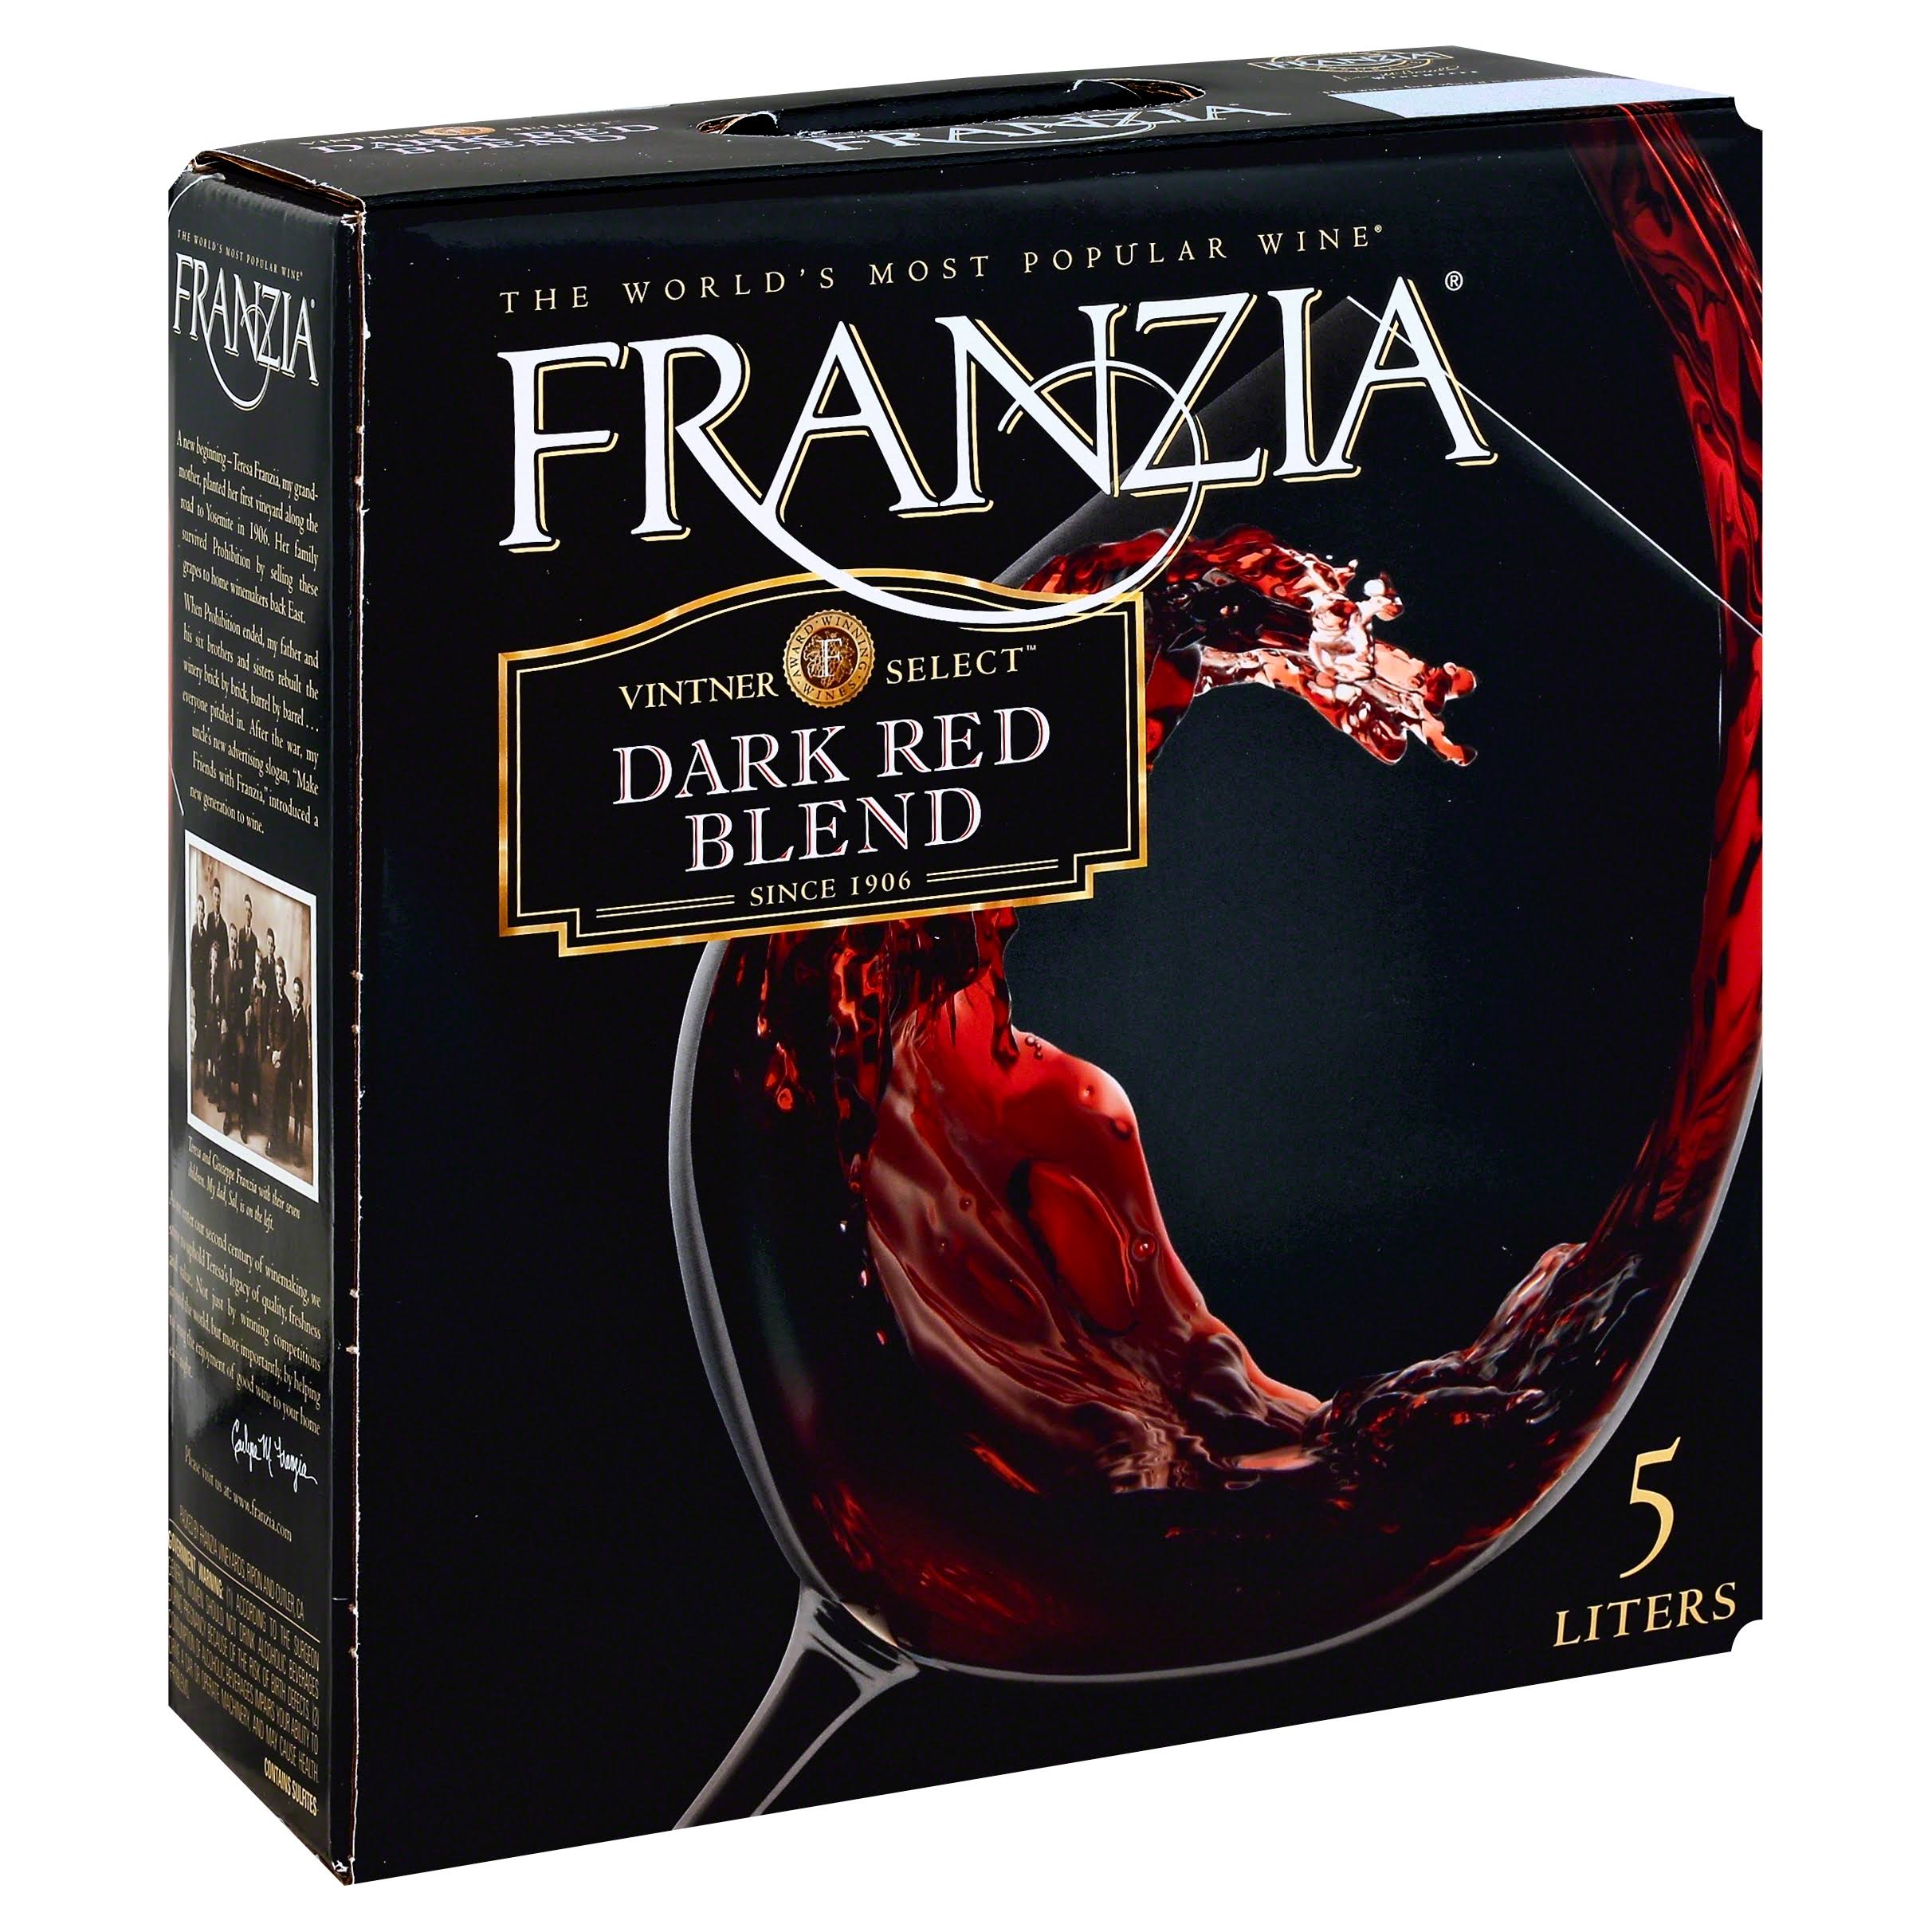 Franzia Vintner Select Dark Red Wine Blend Wine - 5L